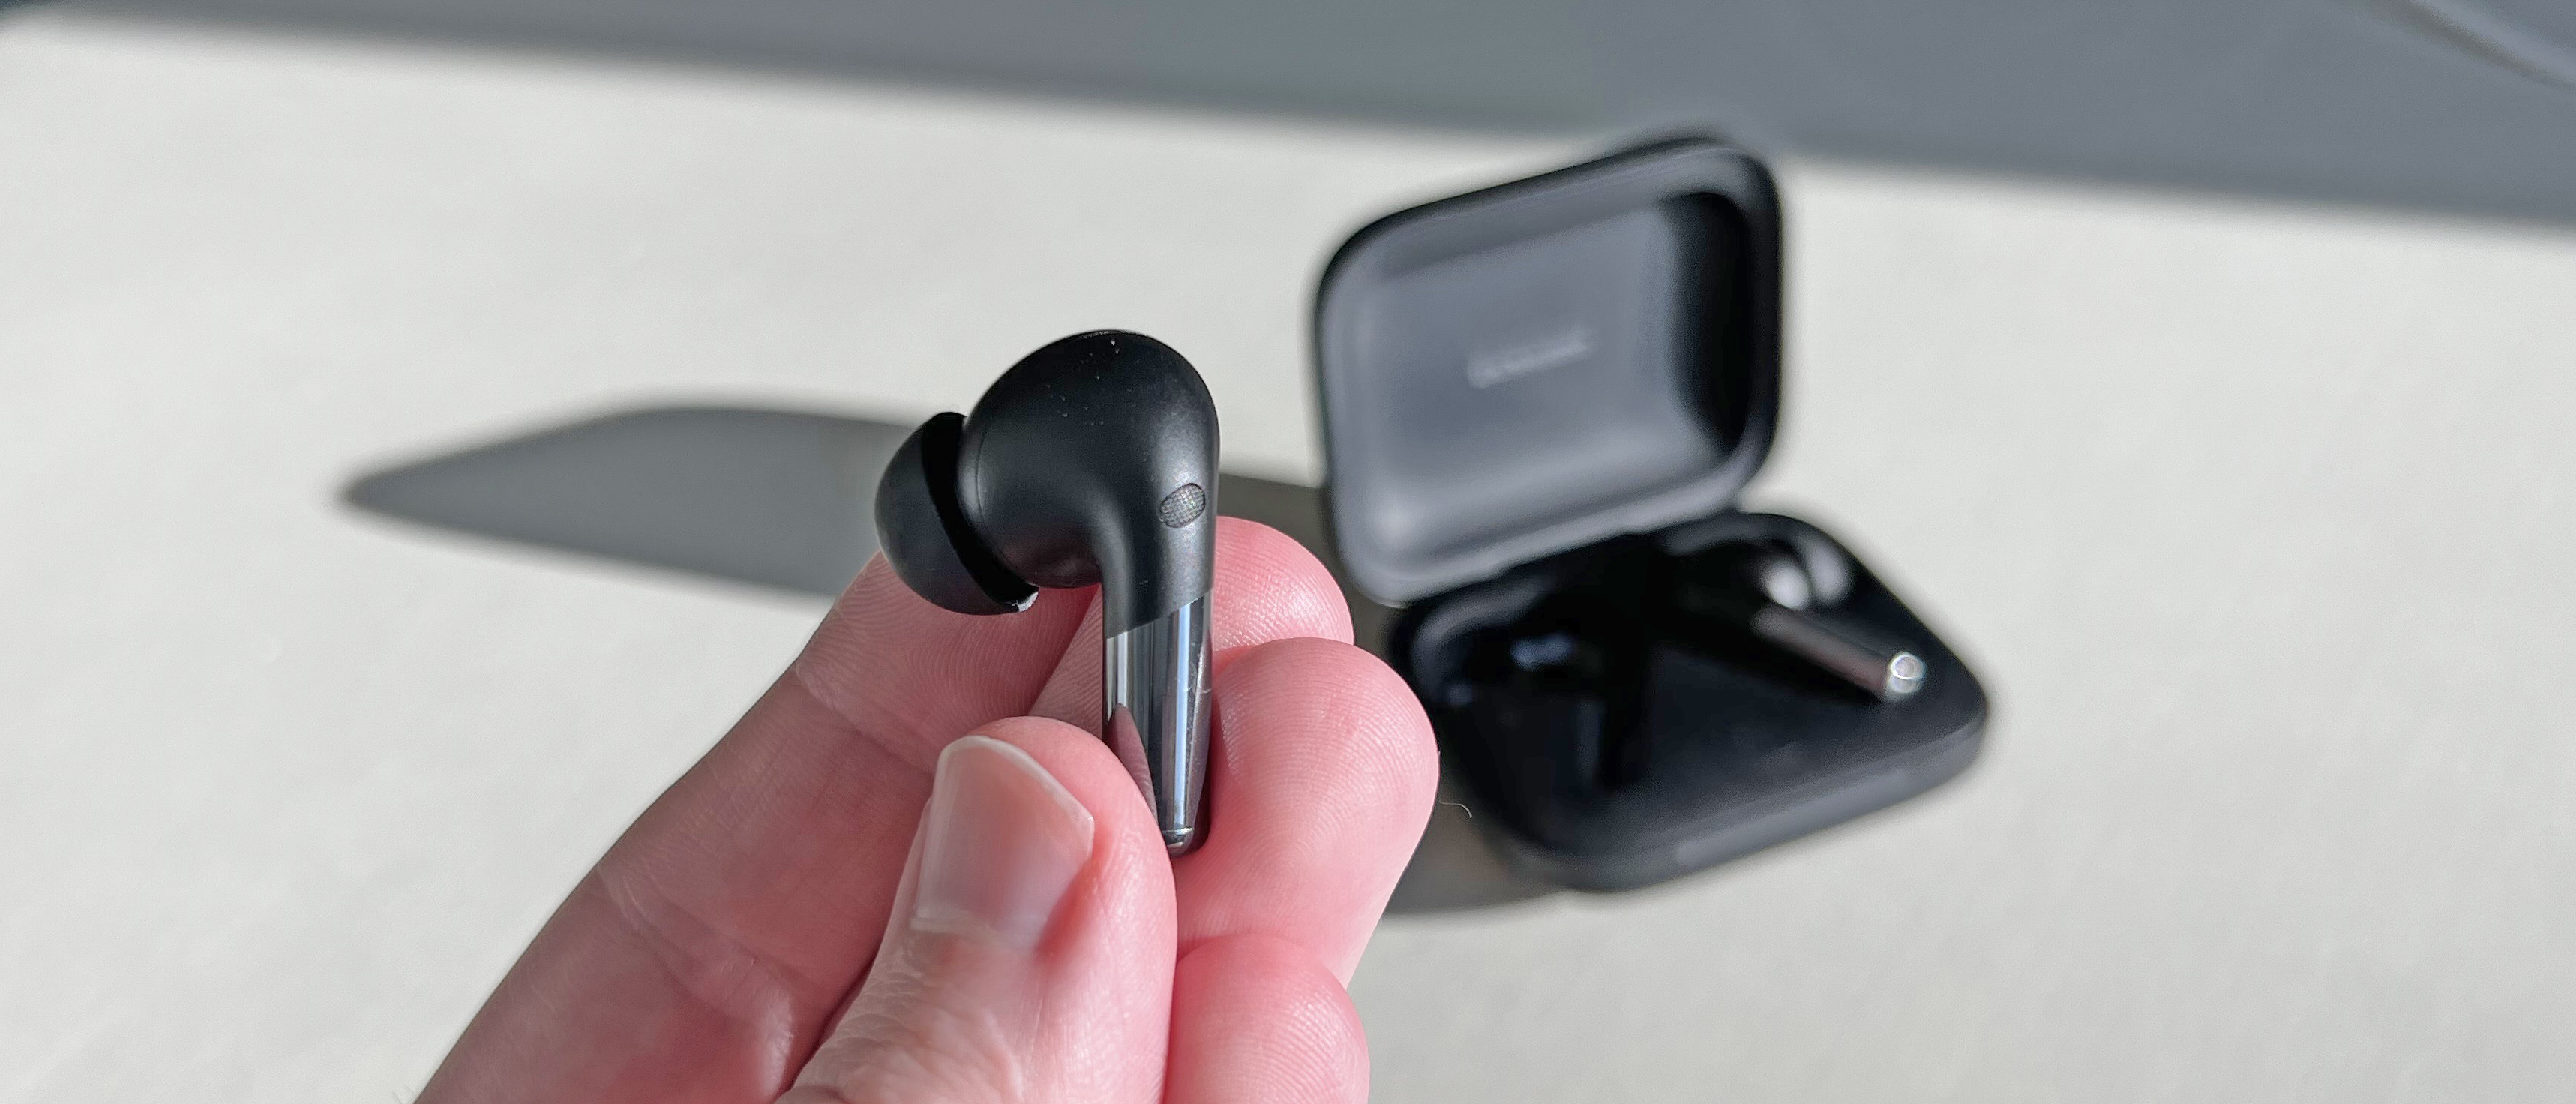 JBL unveiled the $250 Tour Pro 2 premium TWS earphones that can